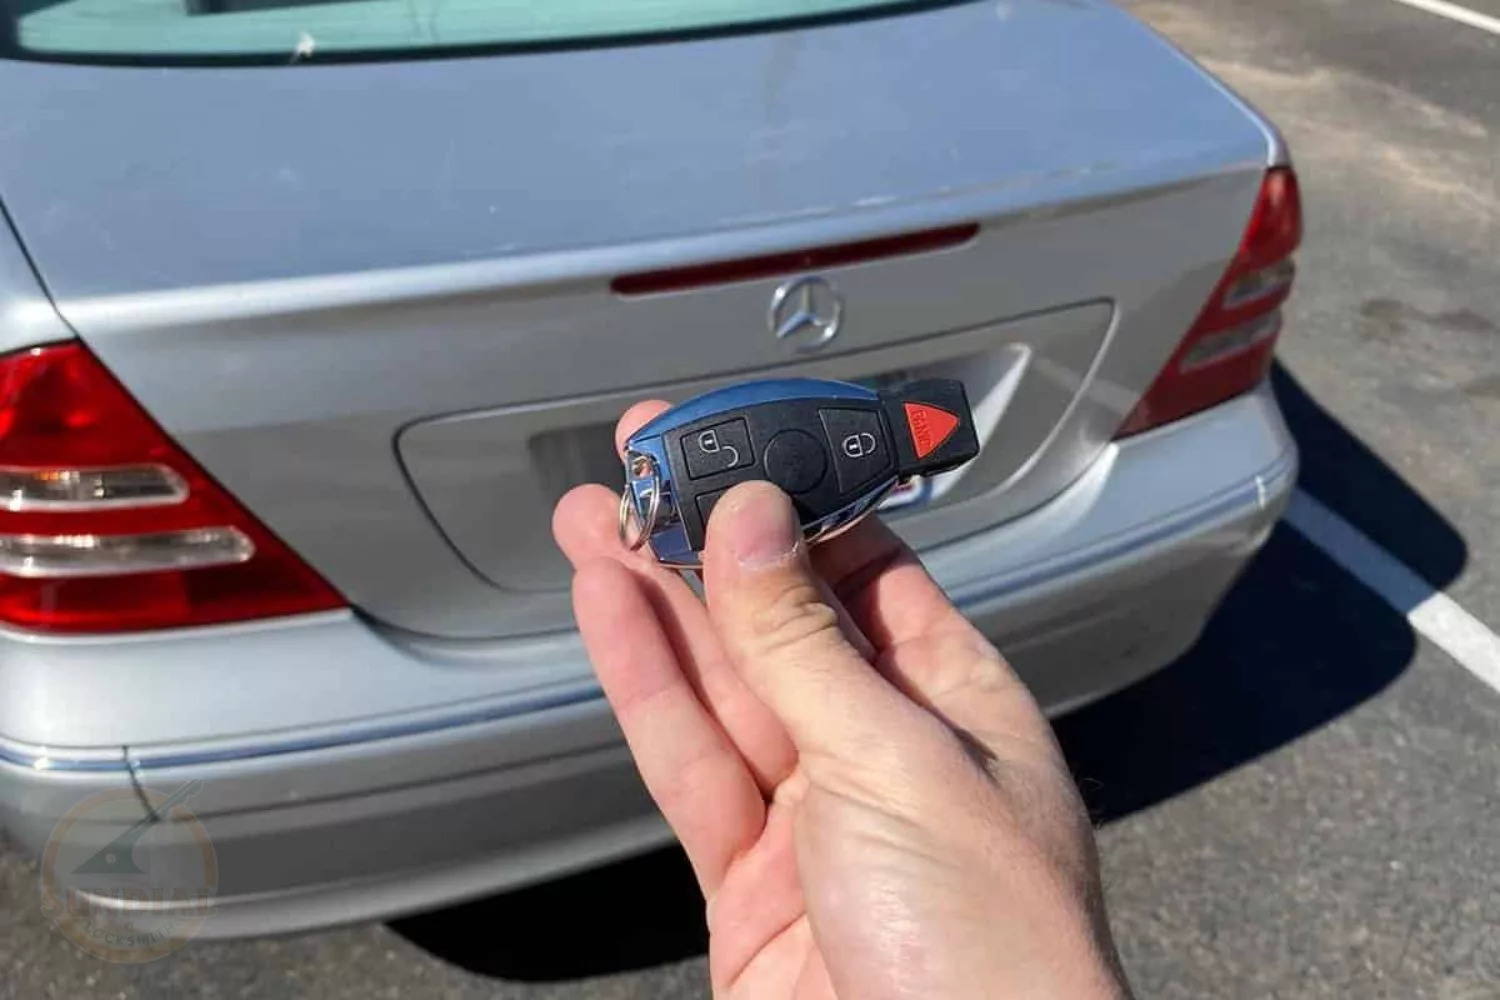 Hand holding a car key fob near vehicle.